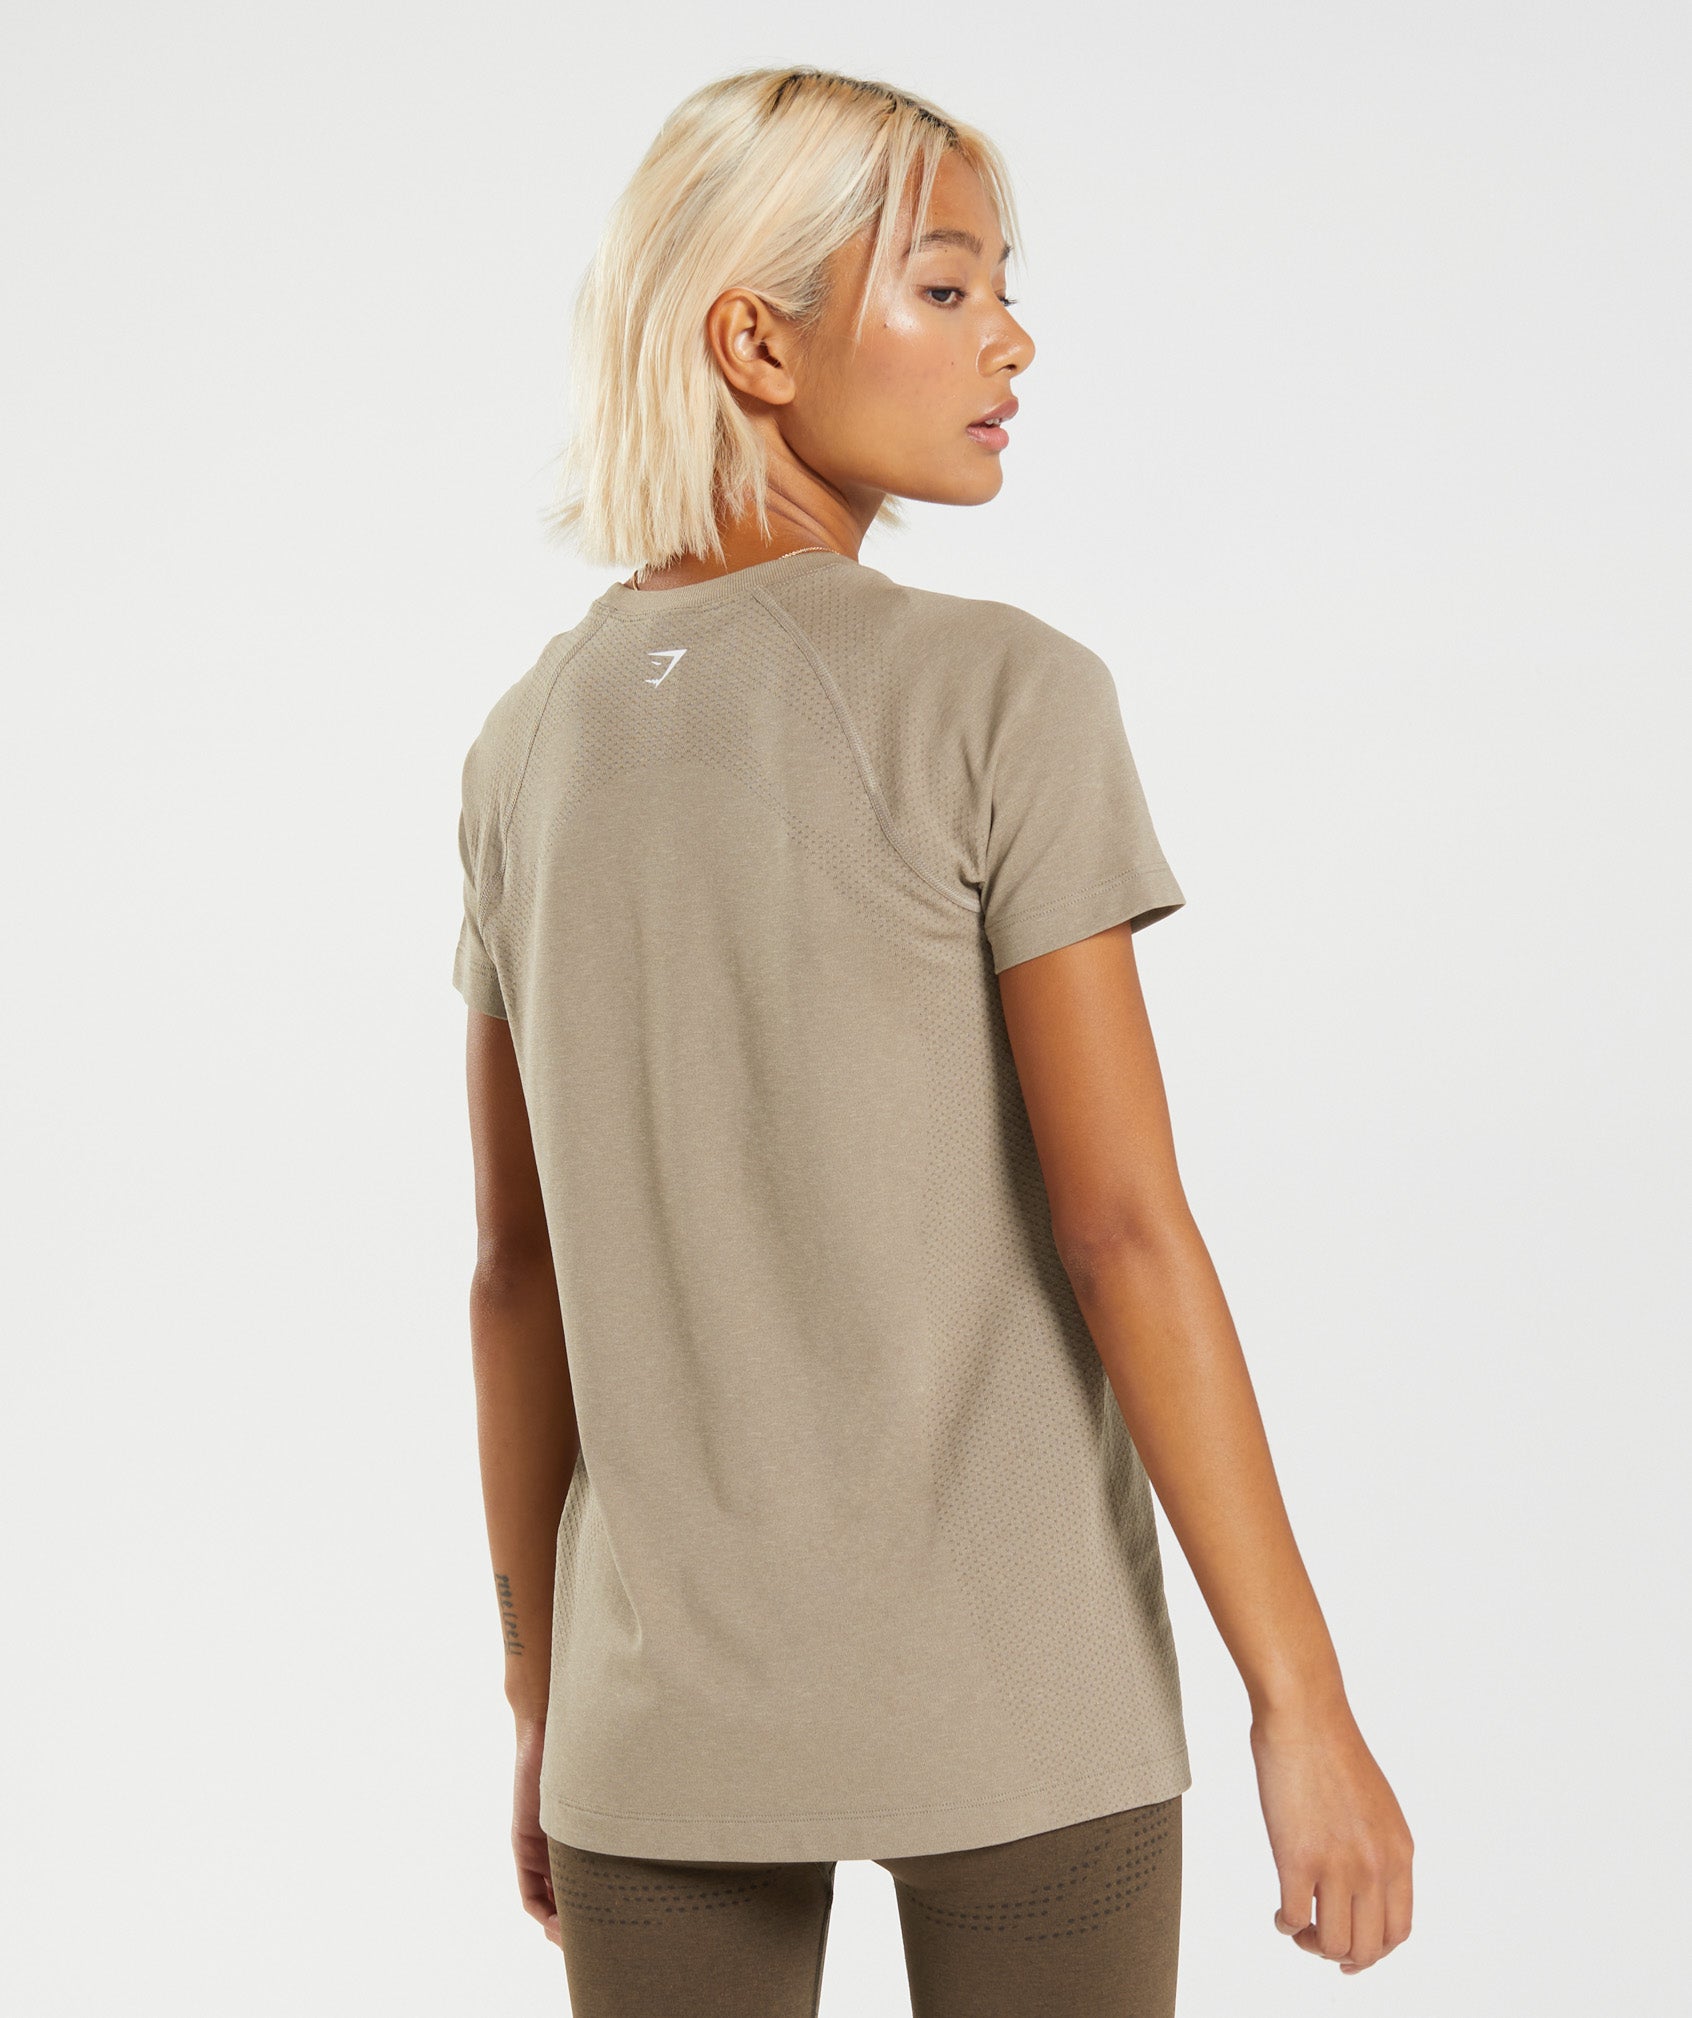 Vital Seamless 2.0 Light T-Shirt in Vanilla Brown Marl - view 2